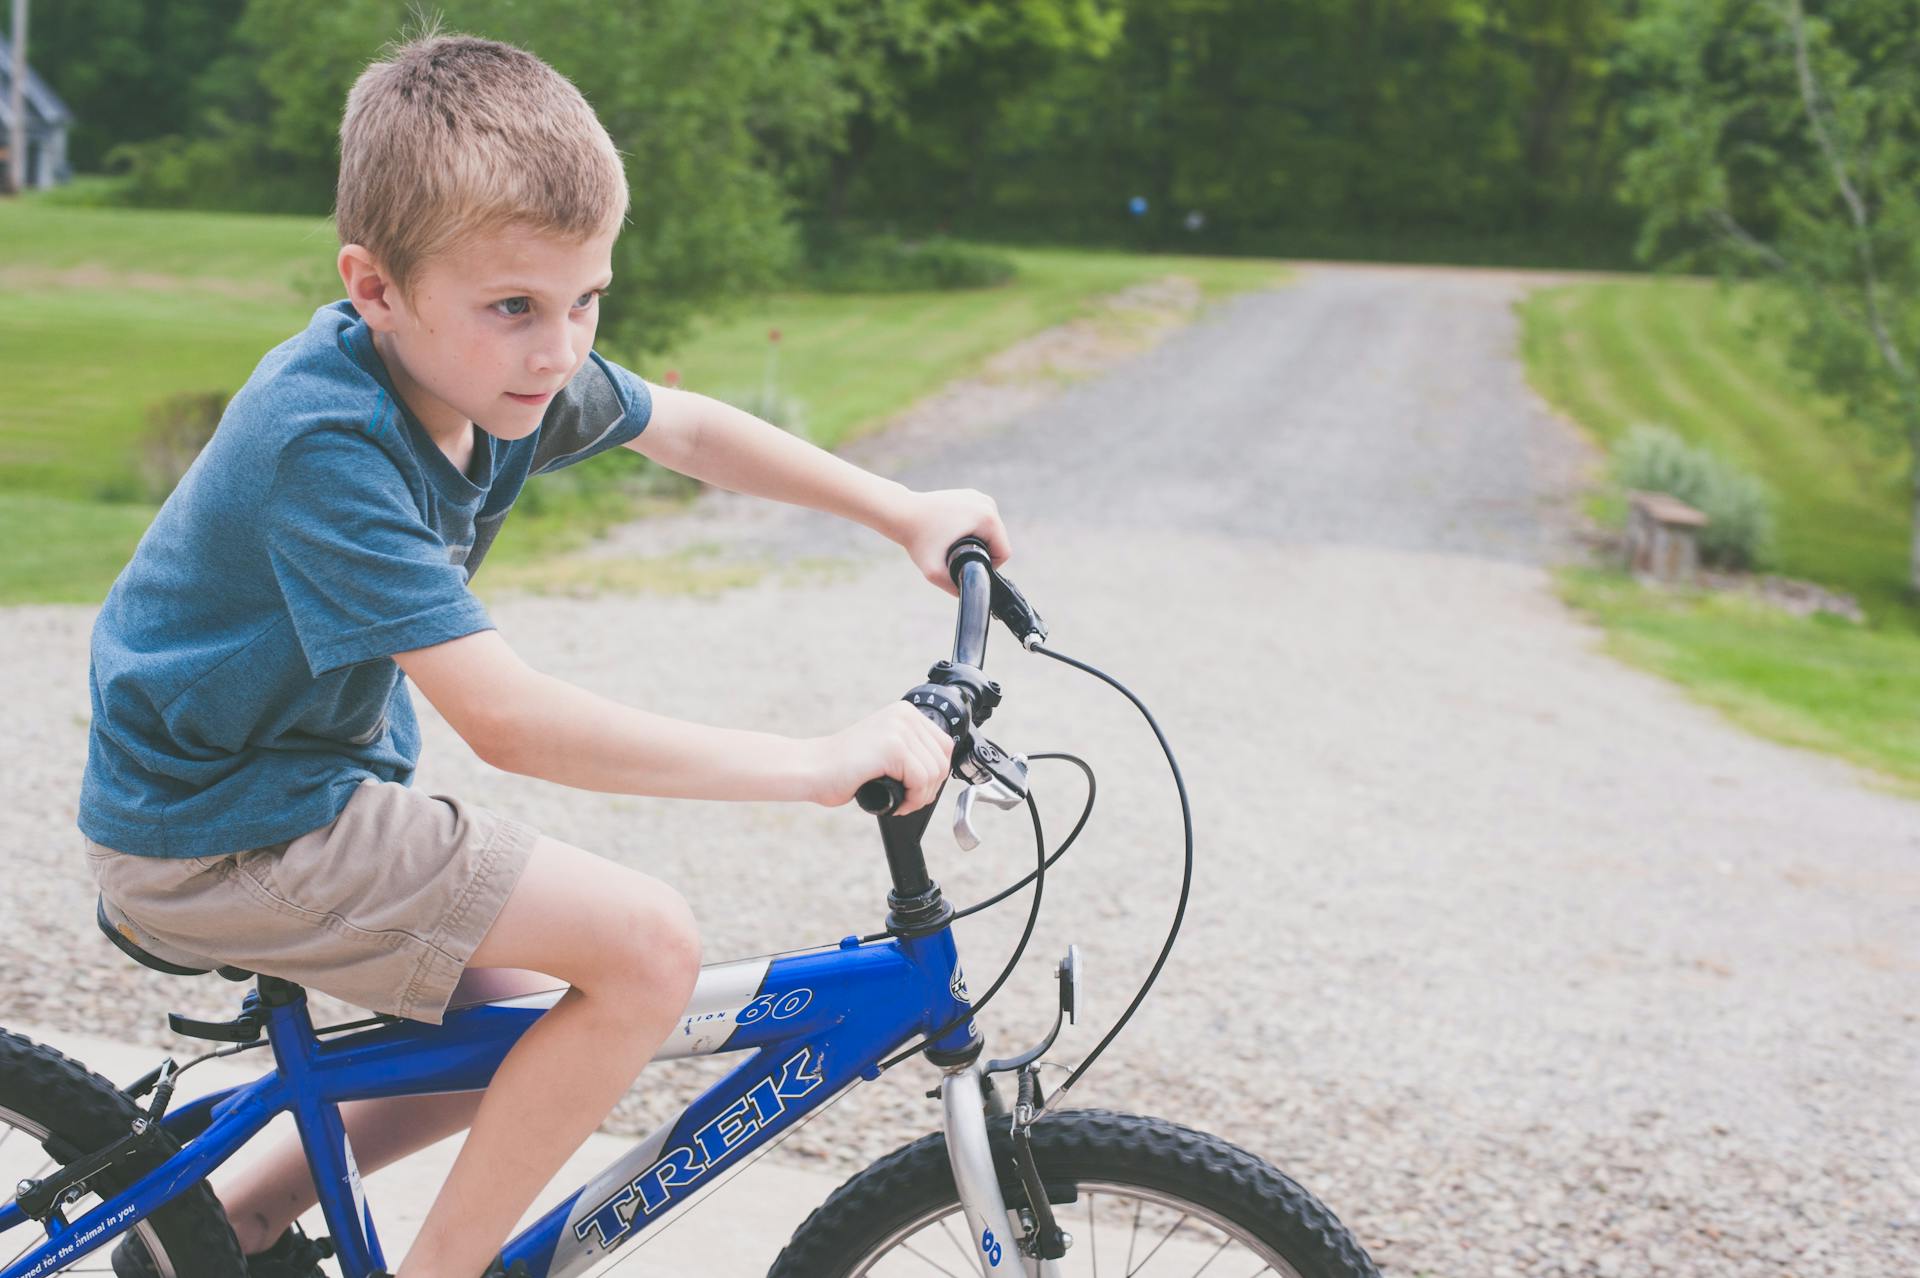 Boy riding a blue bicycle | Source: Pexels